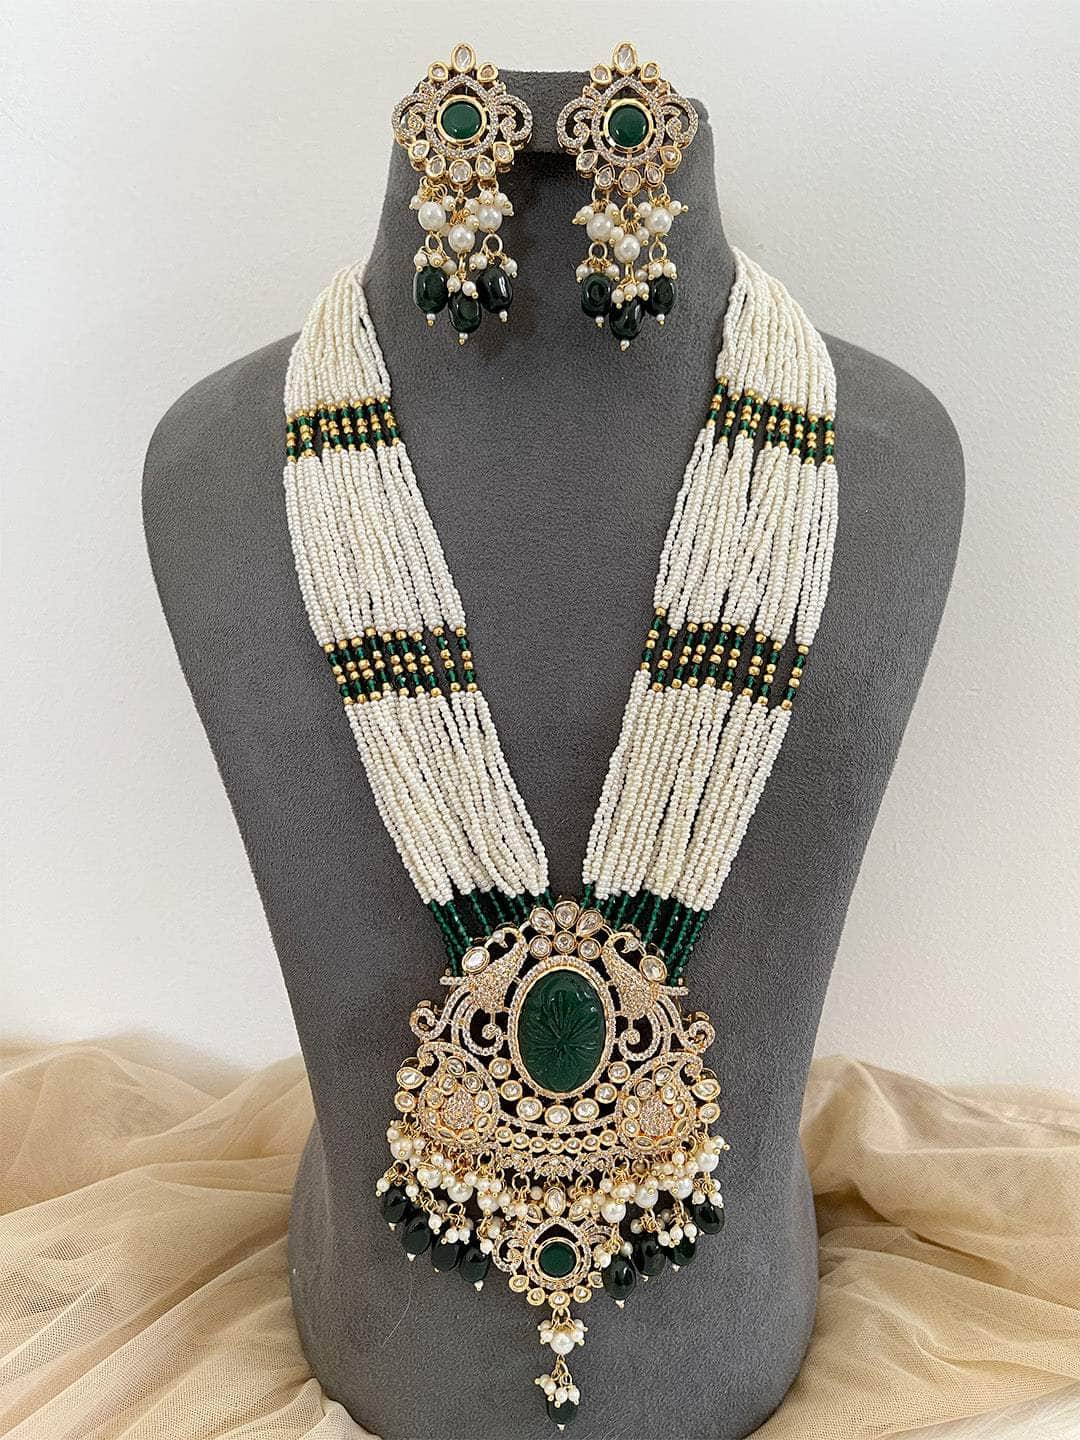 Ishhaara Red Victorian Necklace with Monalisa Beads